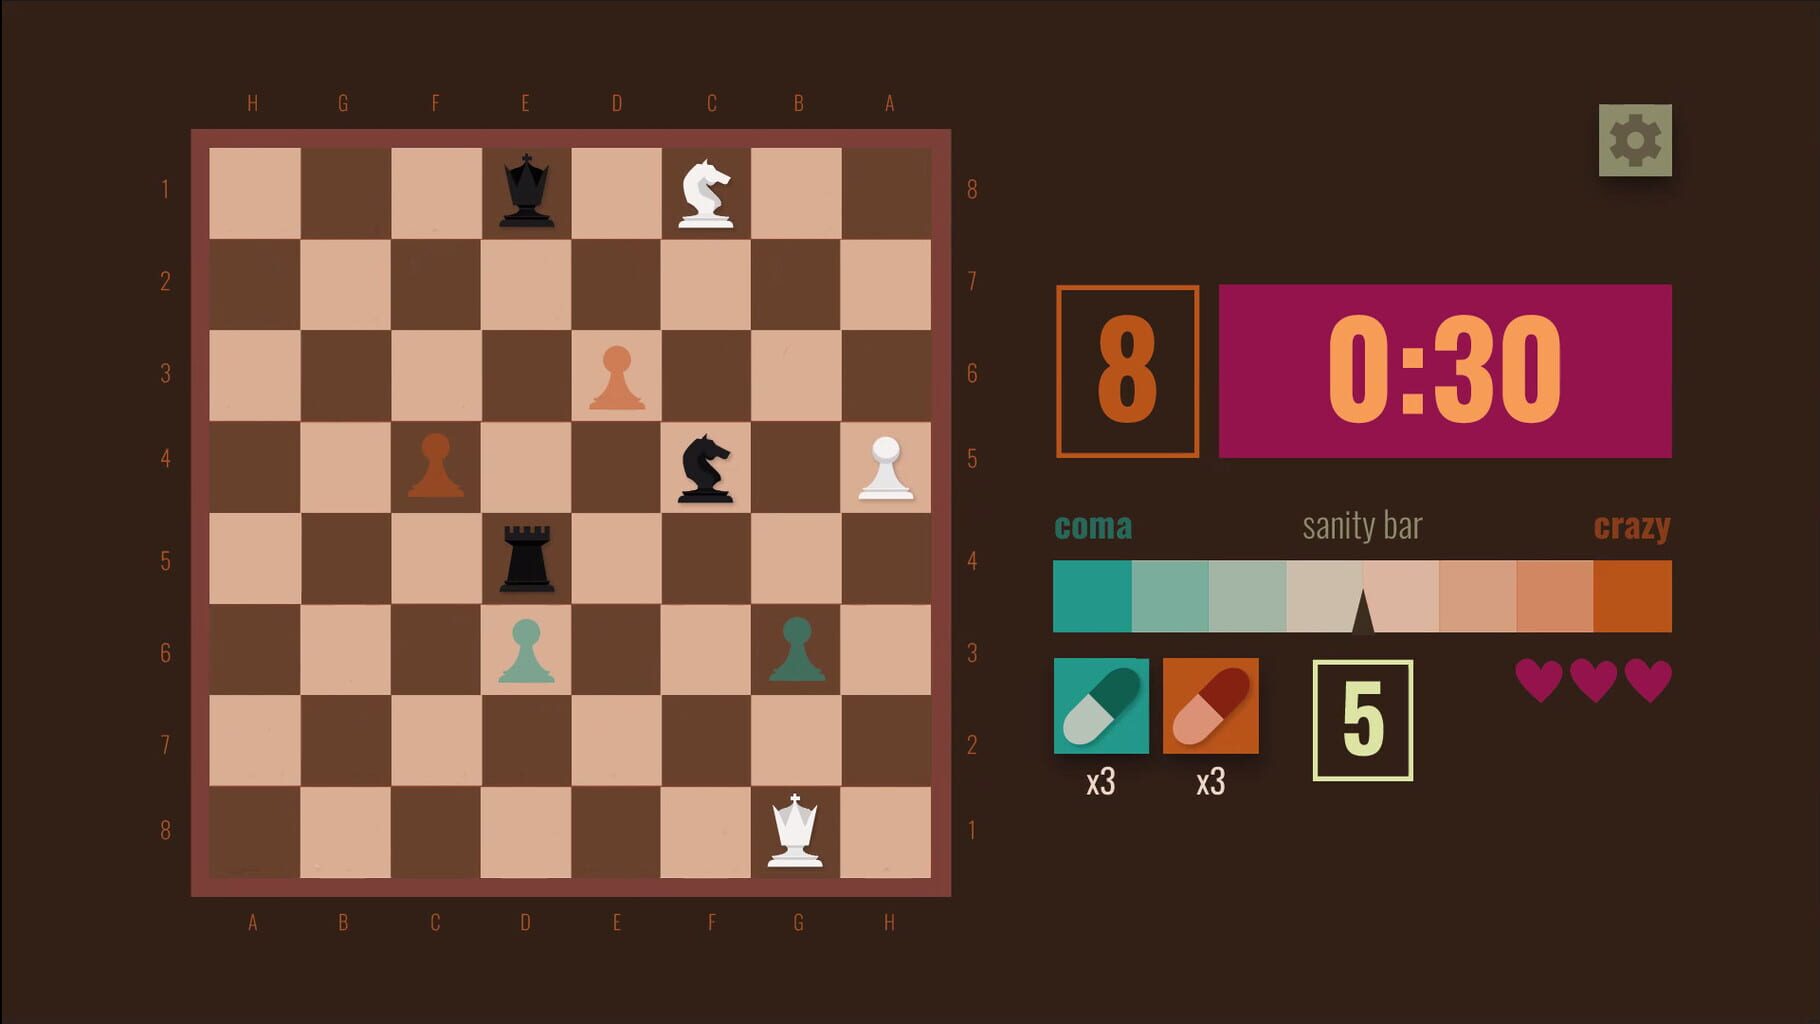 Captura de pantalla - Chess Pills